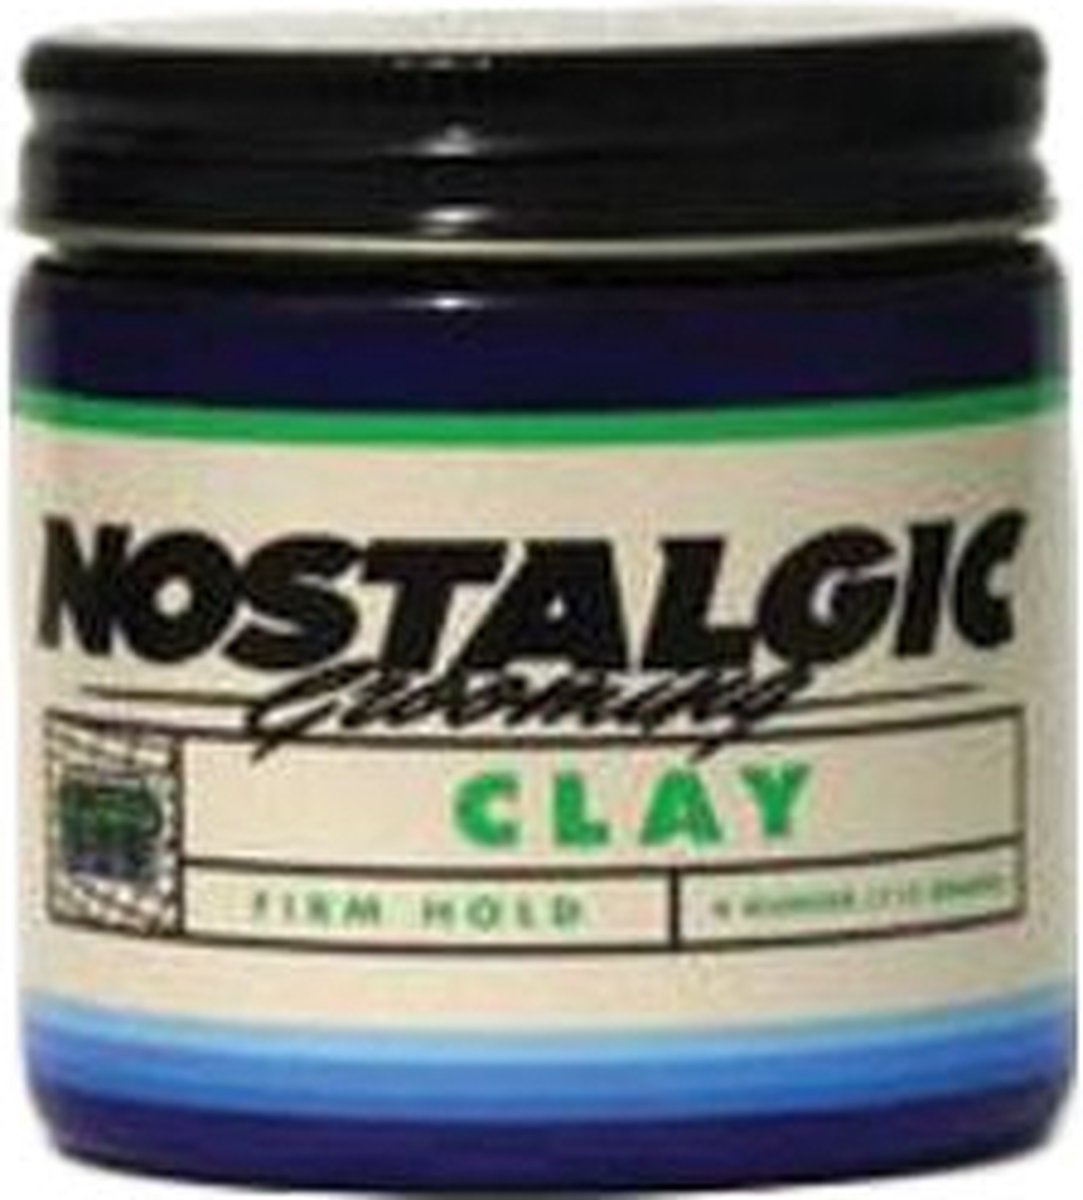 Nostalgic Clay Water Based Pomade Pineapple Cilantro 118 ml.